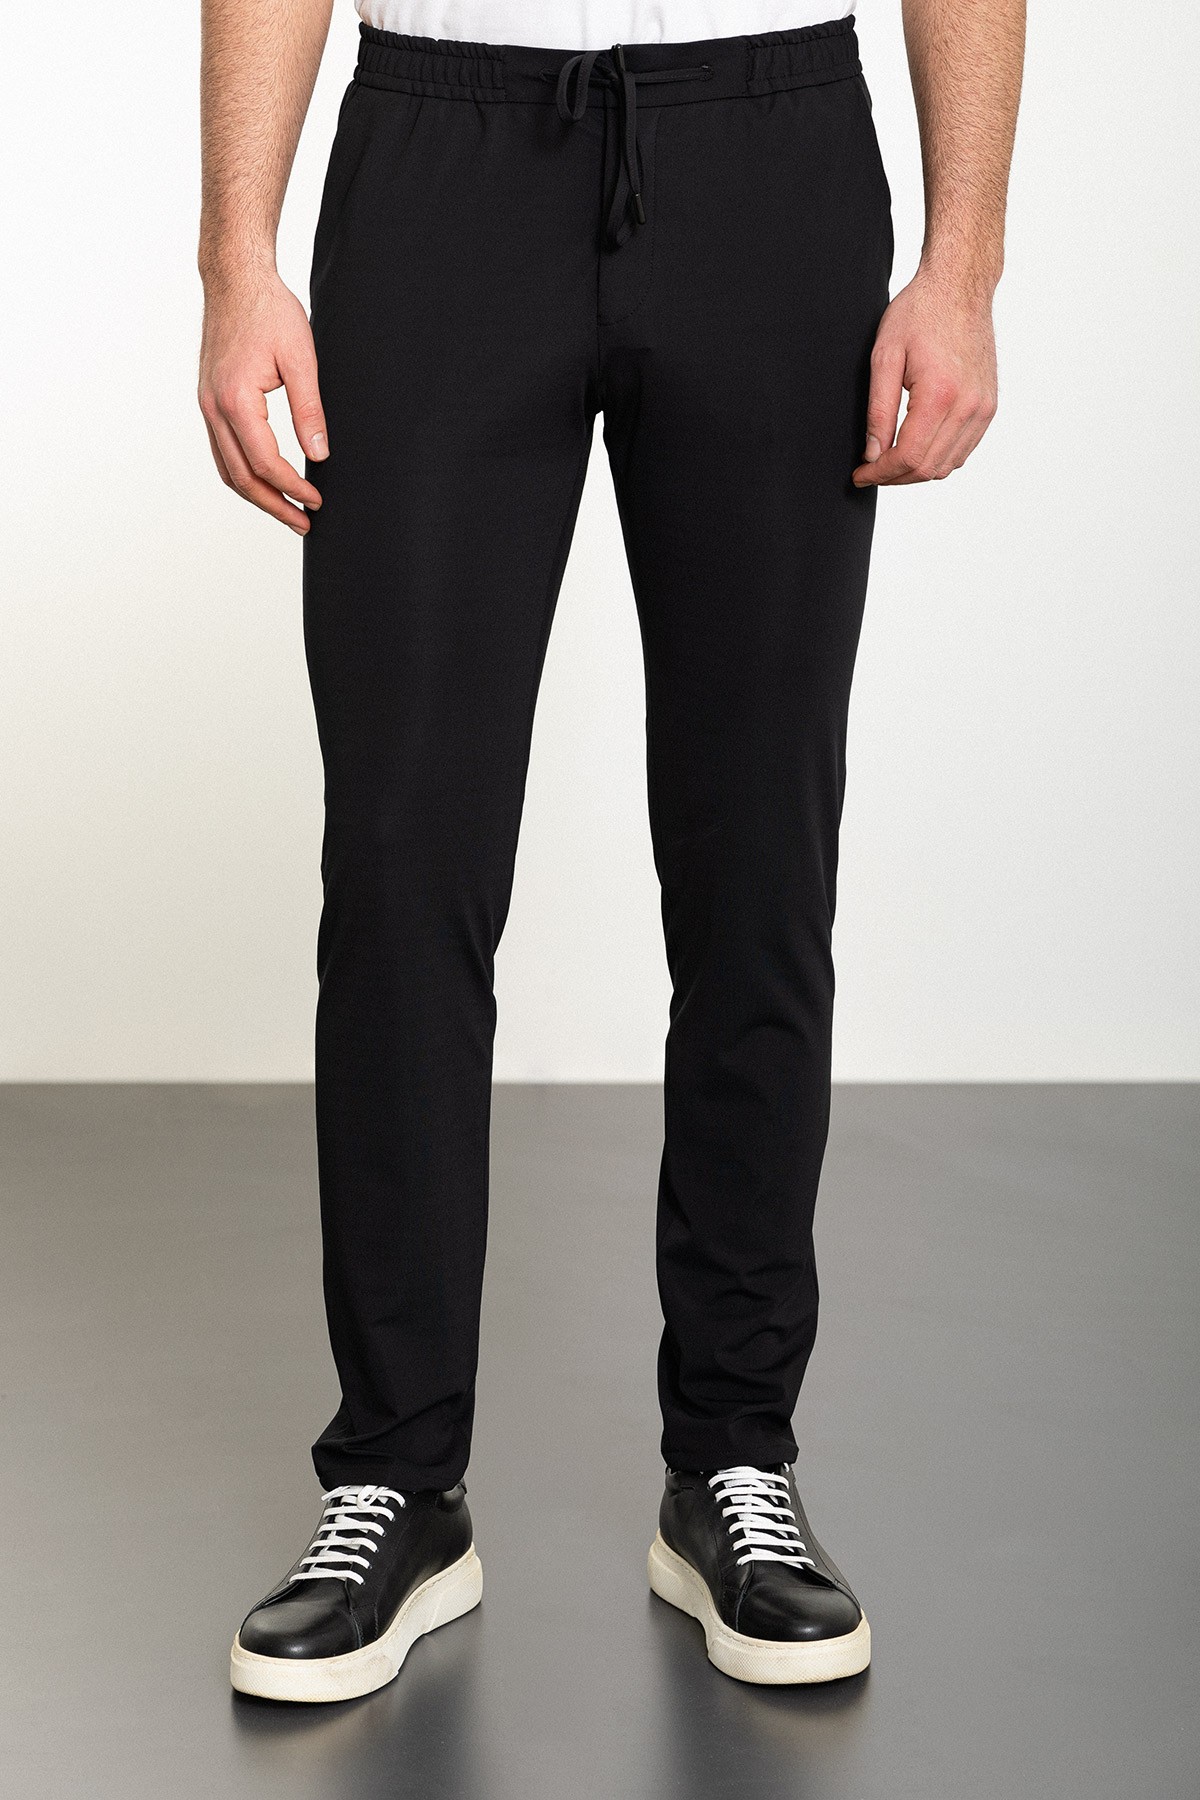 Düz Super Slim Fit Beli Lastikli İpli Erkek Pantolon - Siyah